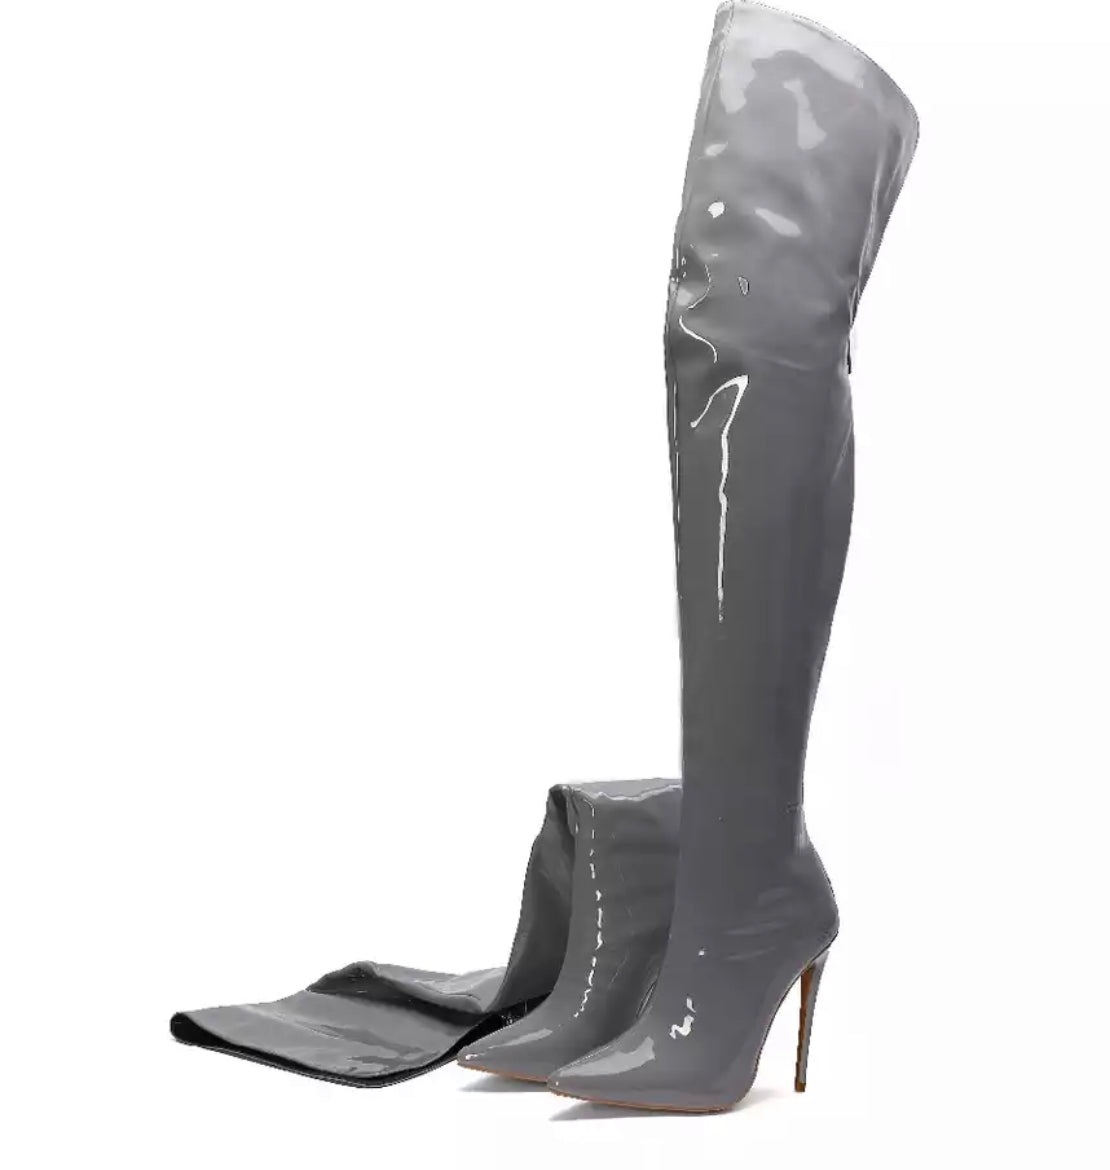 A Shade Of Grey | Women’s Thigh High Boots Preorder 5/20 - Seasonal Secrets